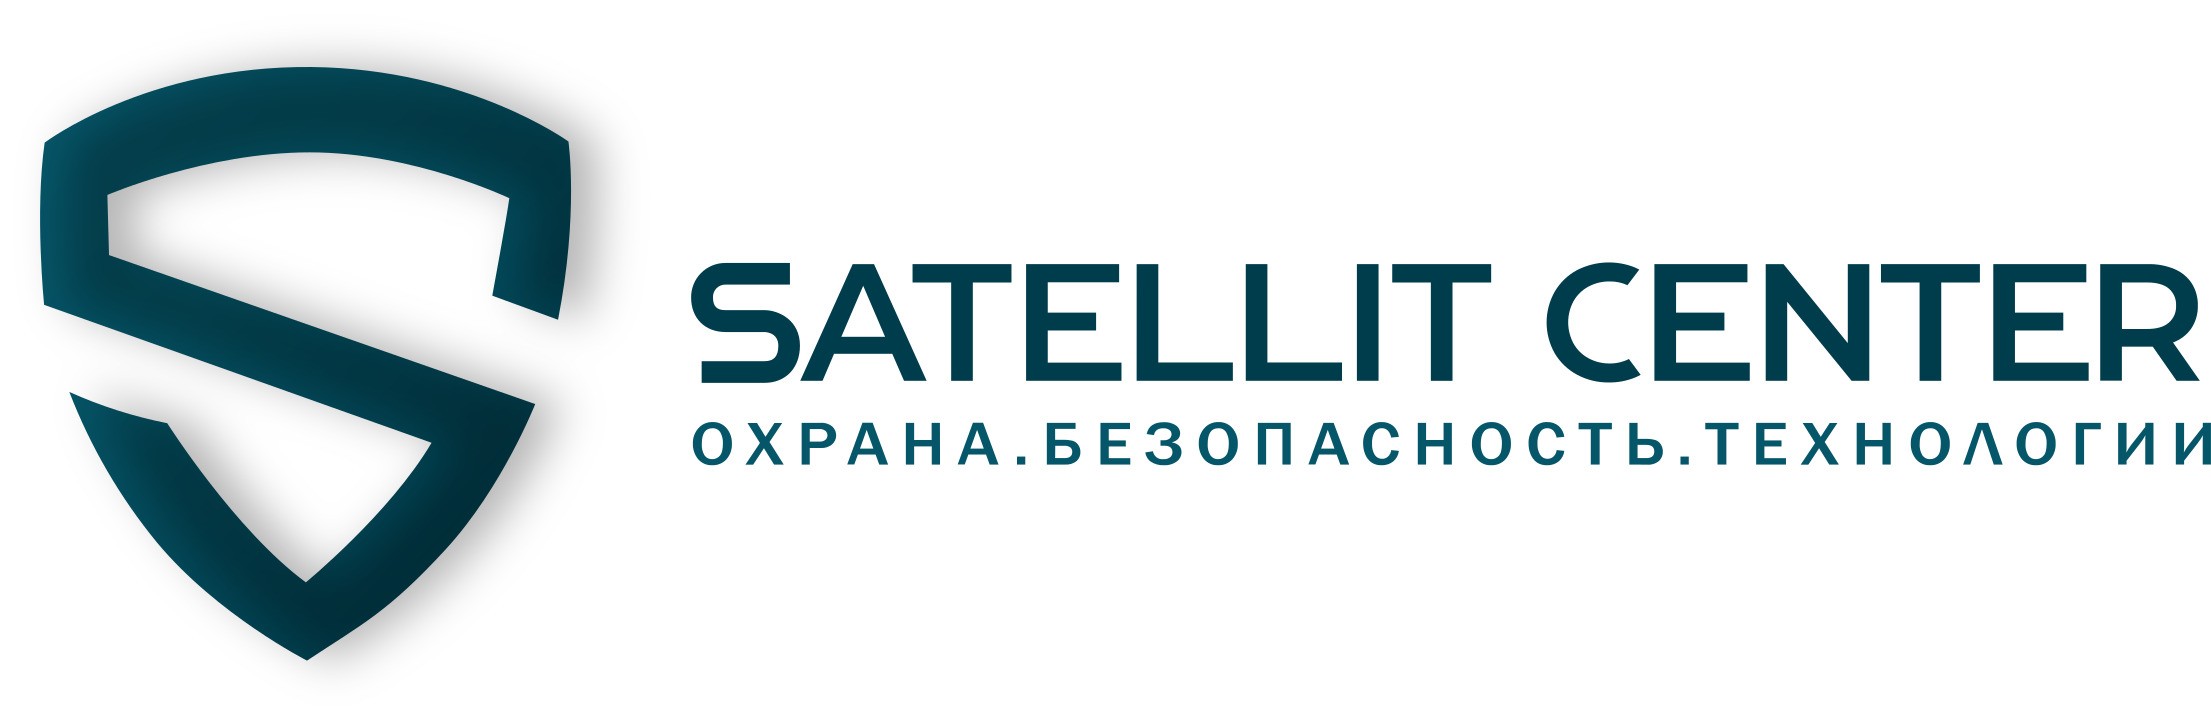 Группа предприятий безопасности Satellit Center